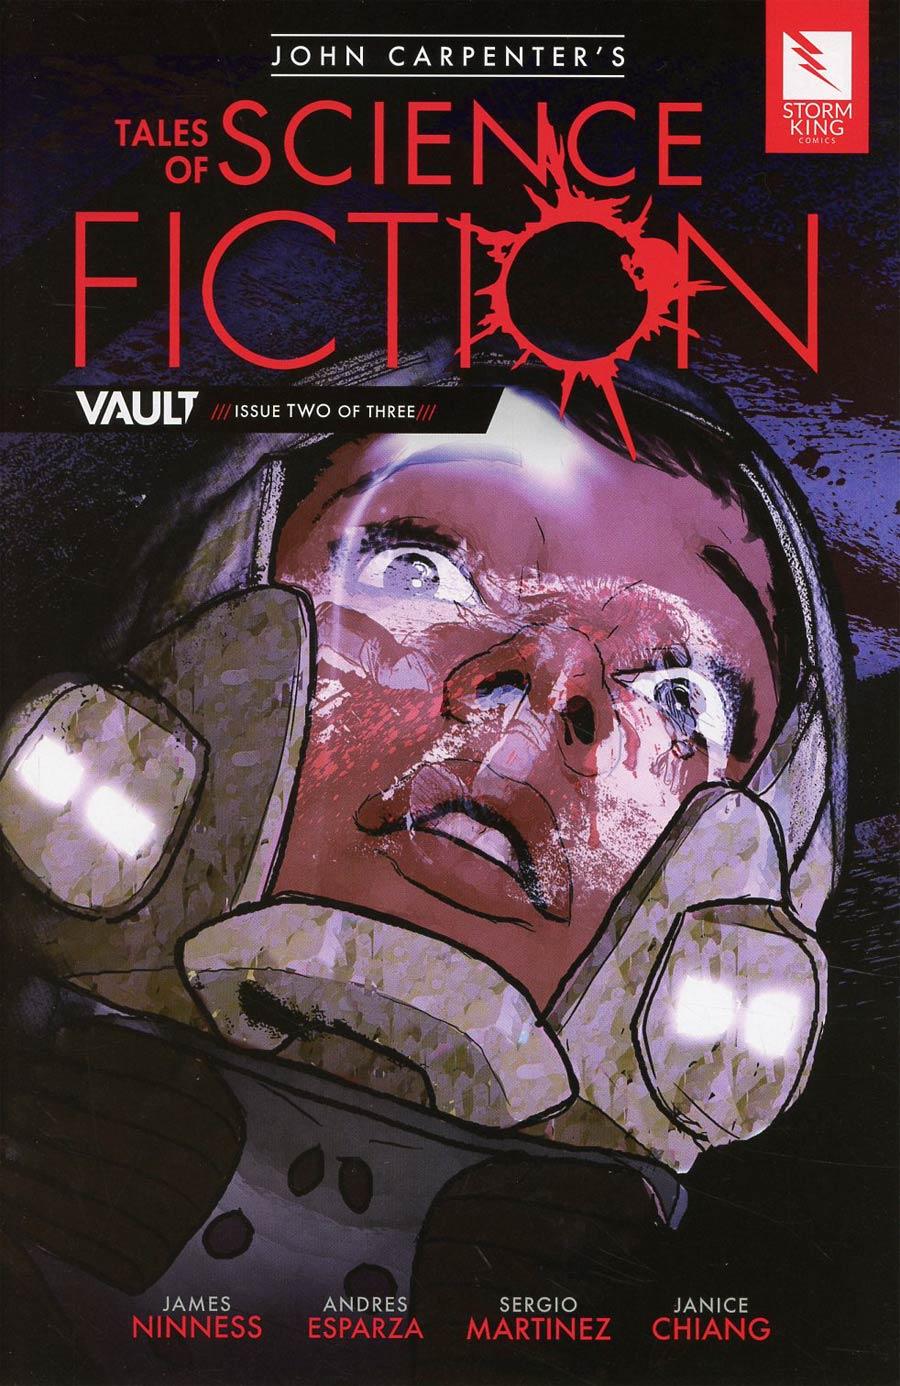 John Carpenters Tales Of Science Fiction Vault Vol. 1 #2